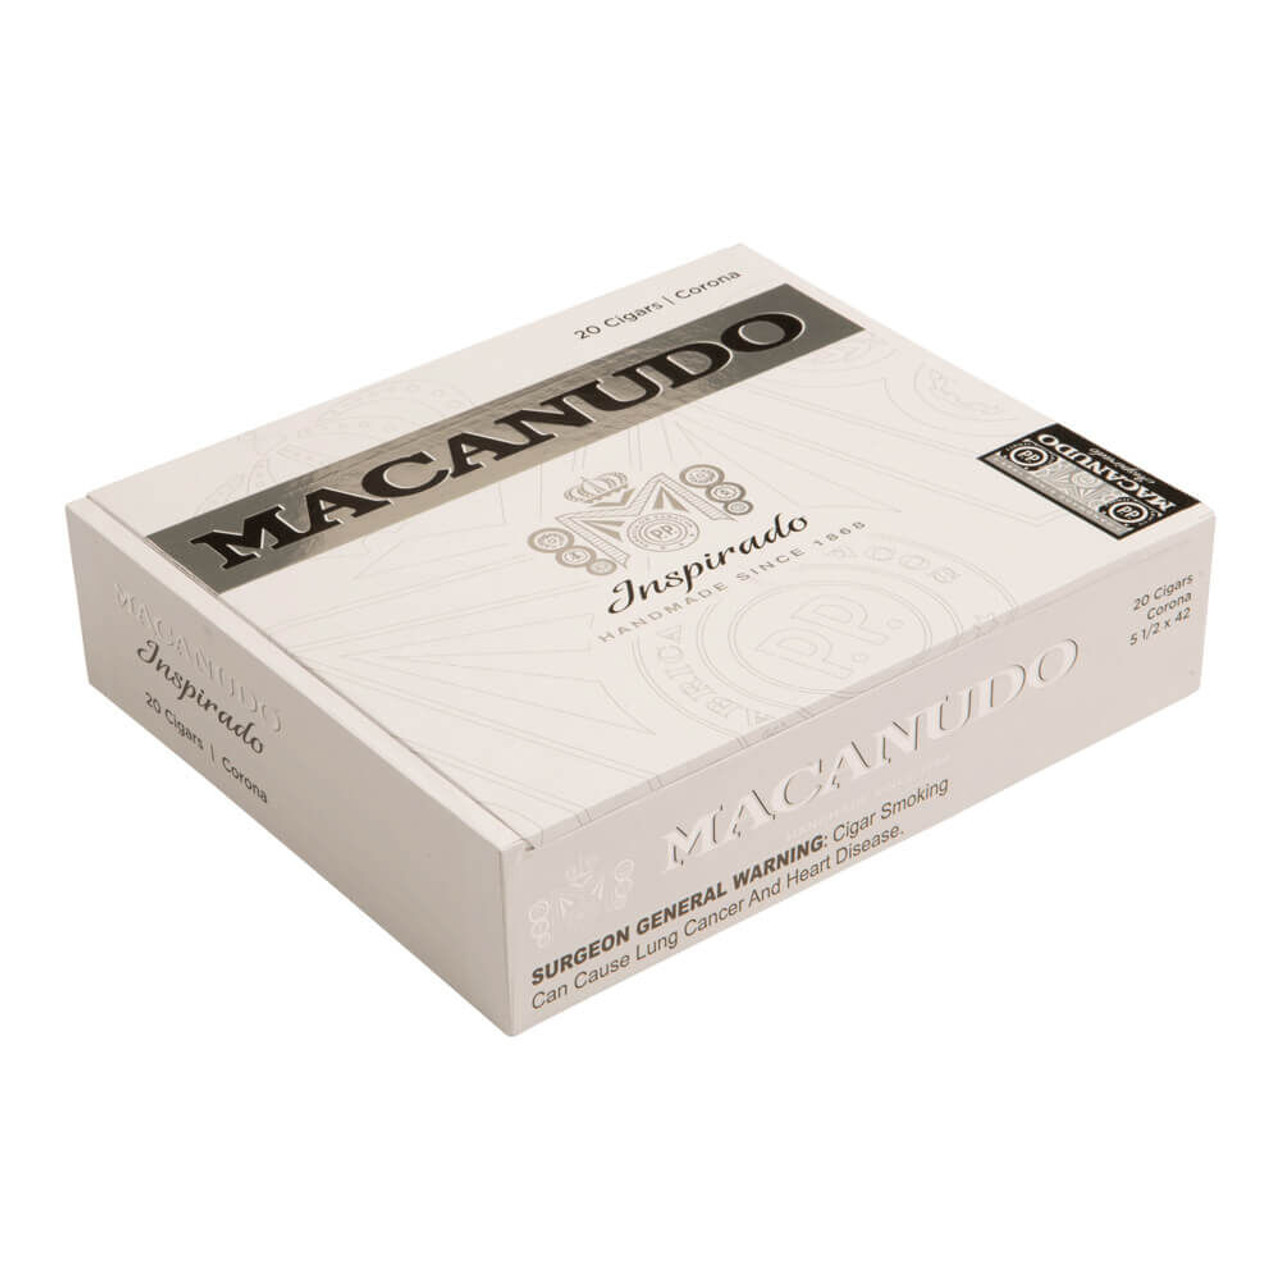 Macanudo Inspirado White Corona Cigars - 5.5 x 42 (Box of 20) *Box